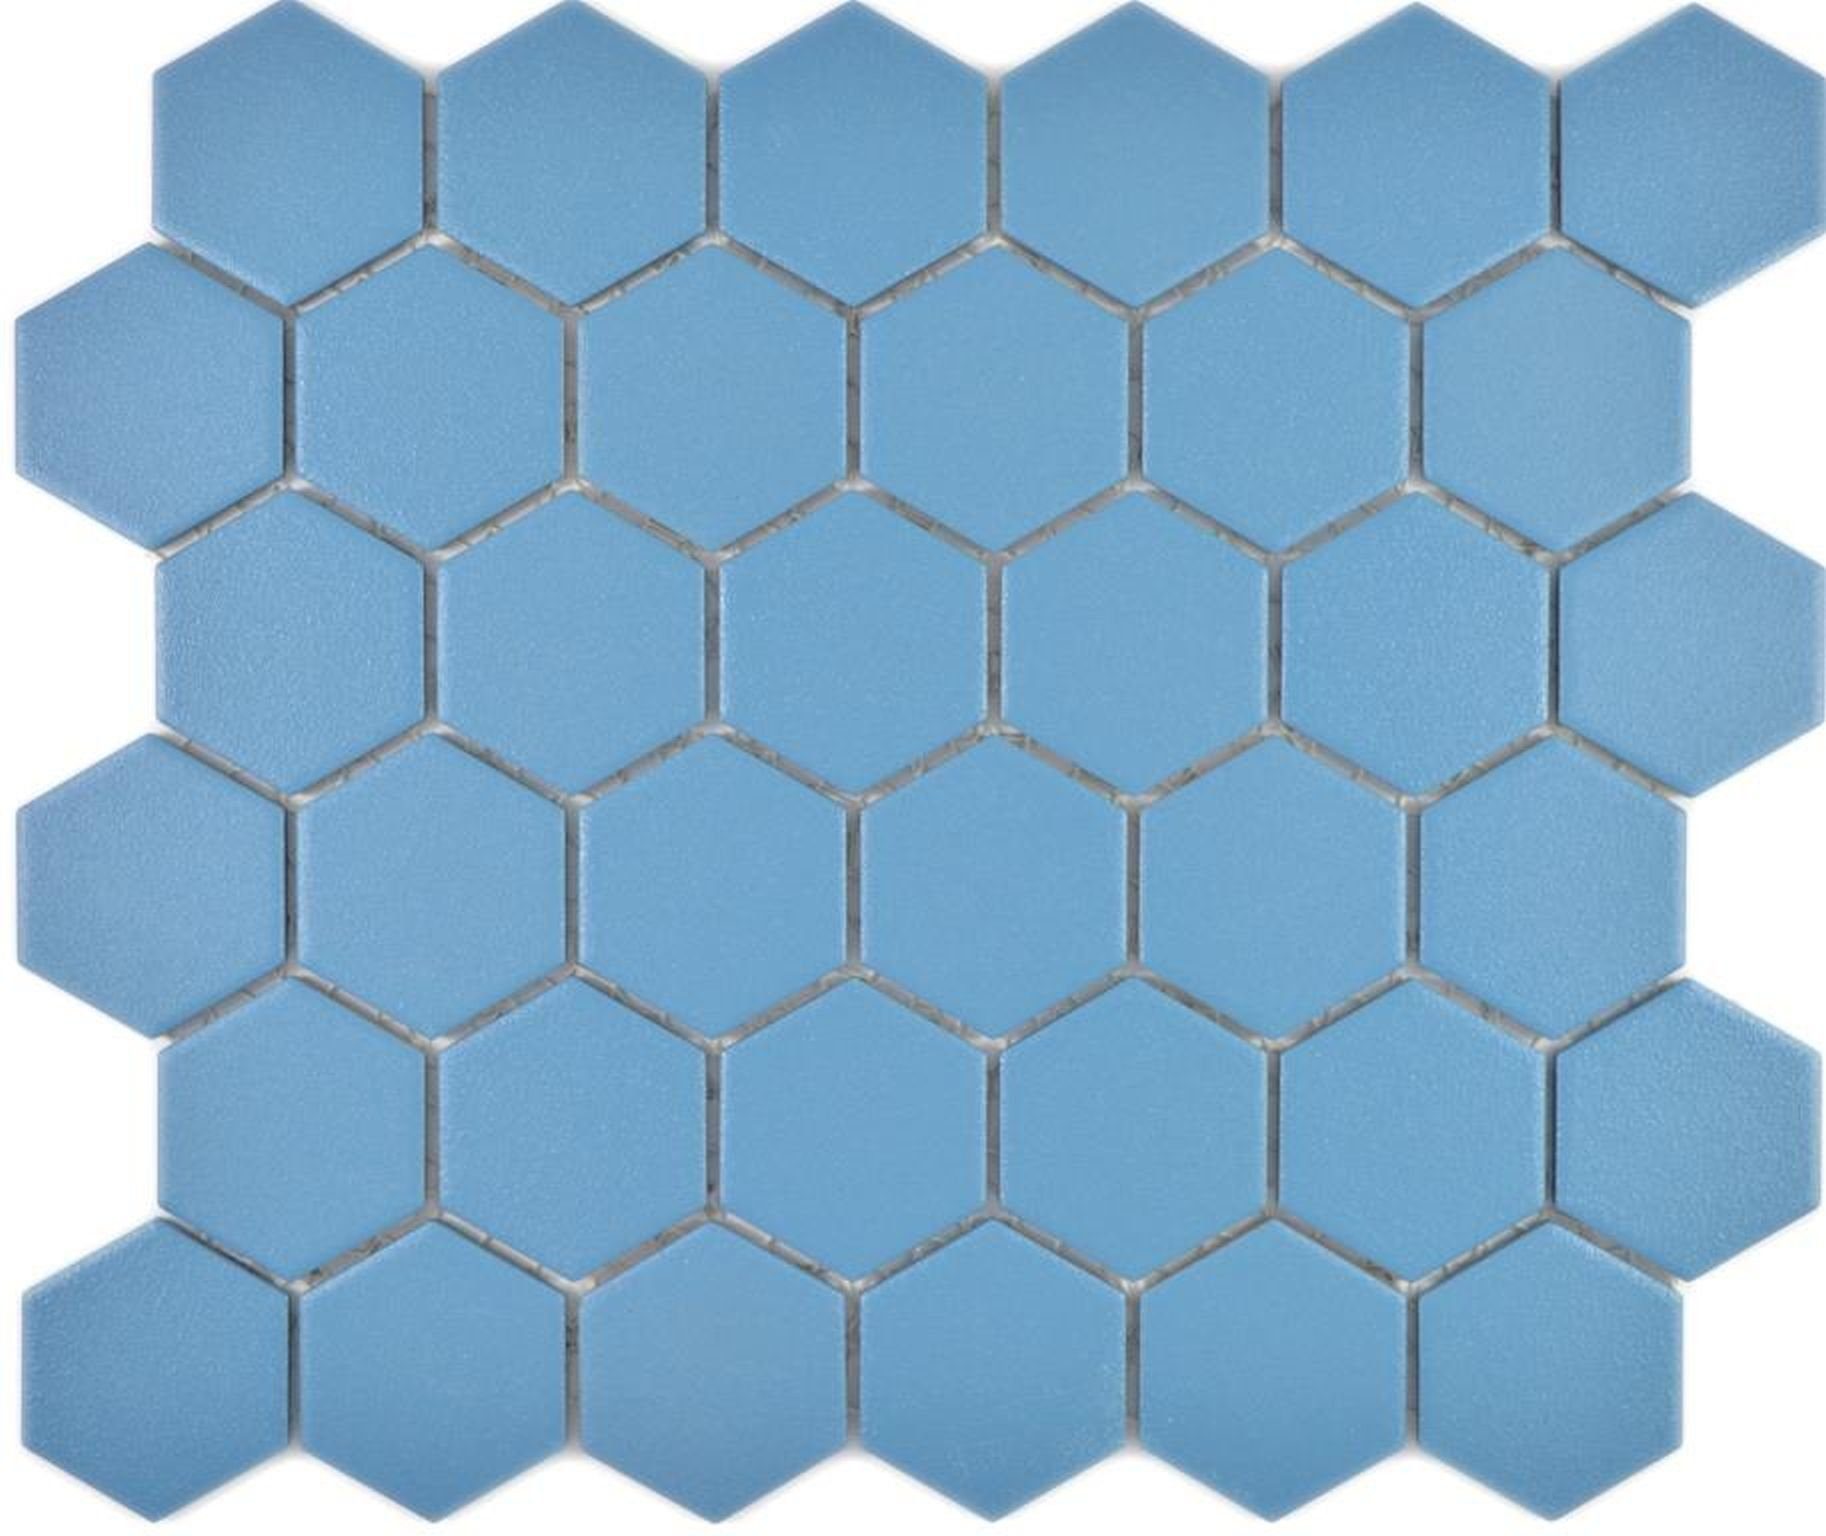 Mosani Mosaikfliesen Hexagonale Sechseck Mosaik Fliese Keramik blaugrün